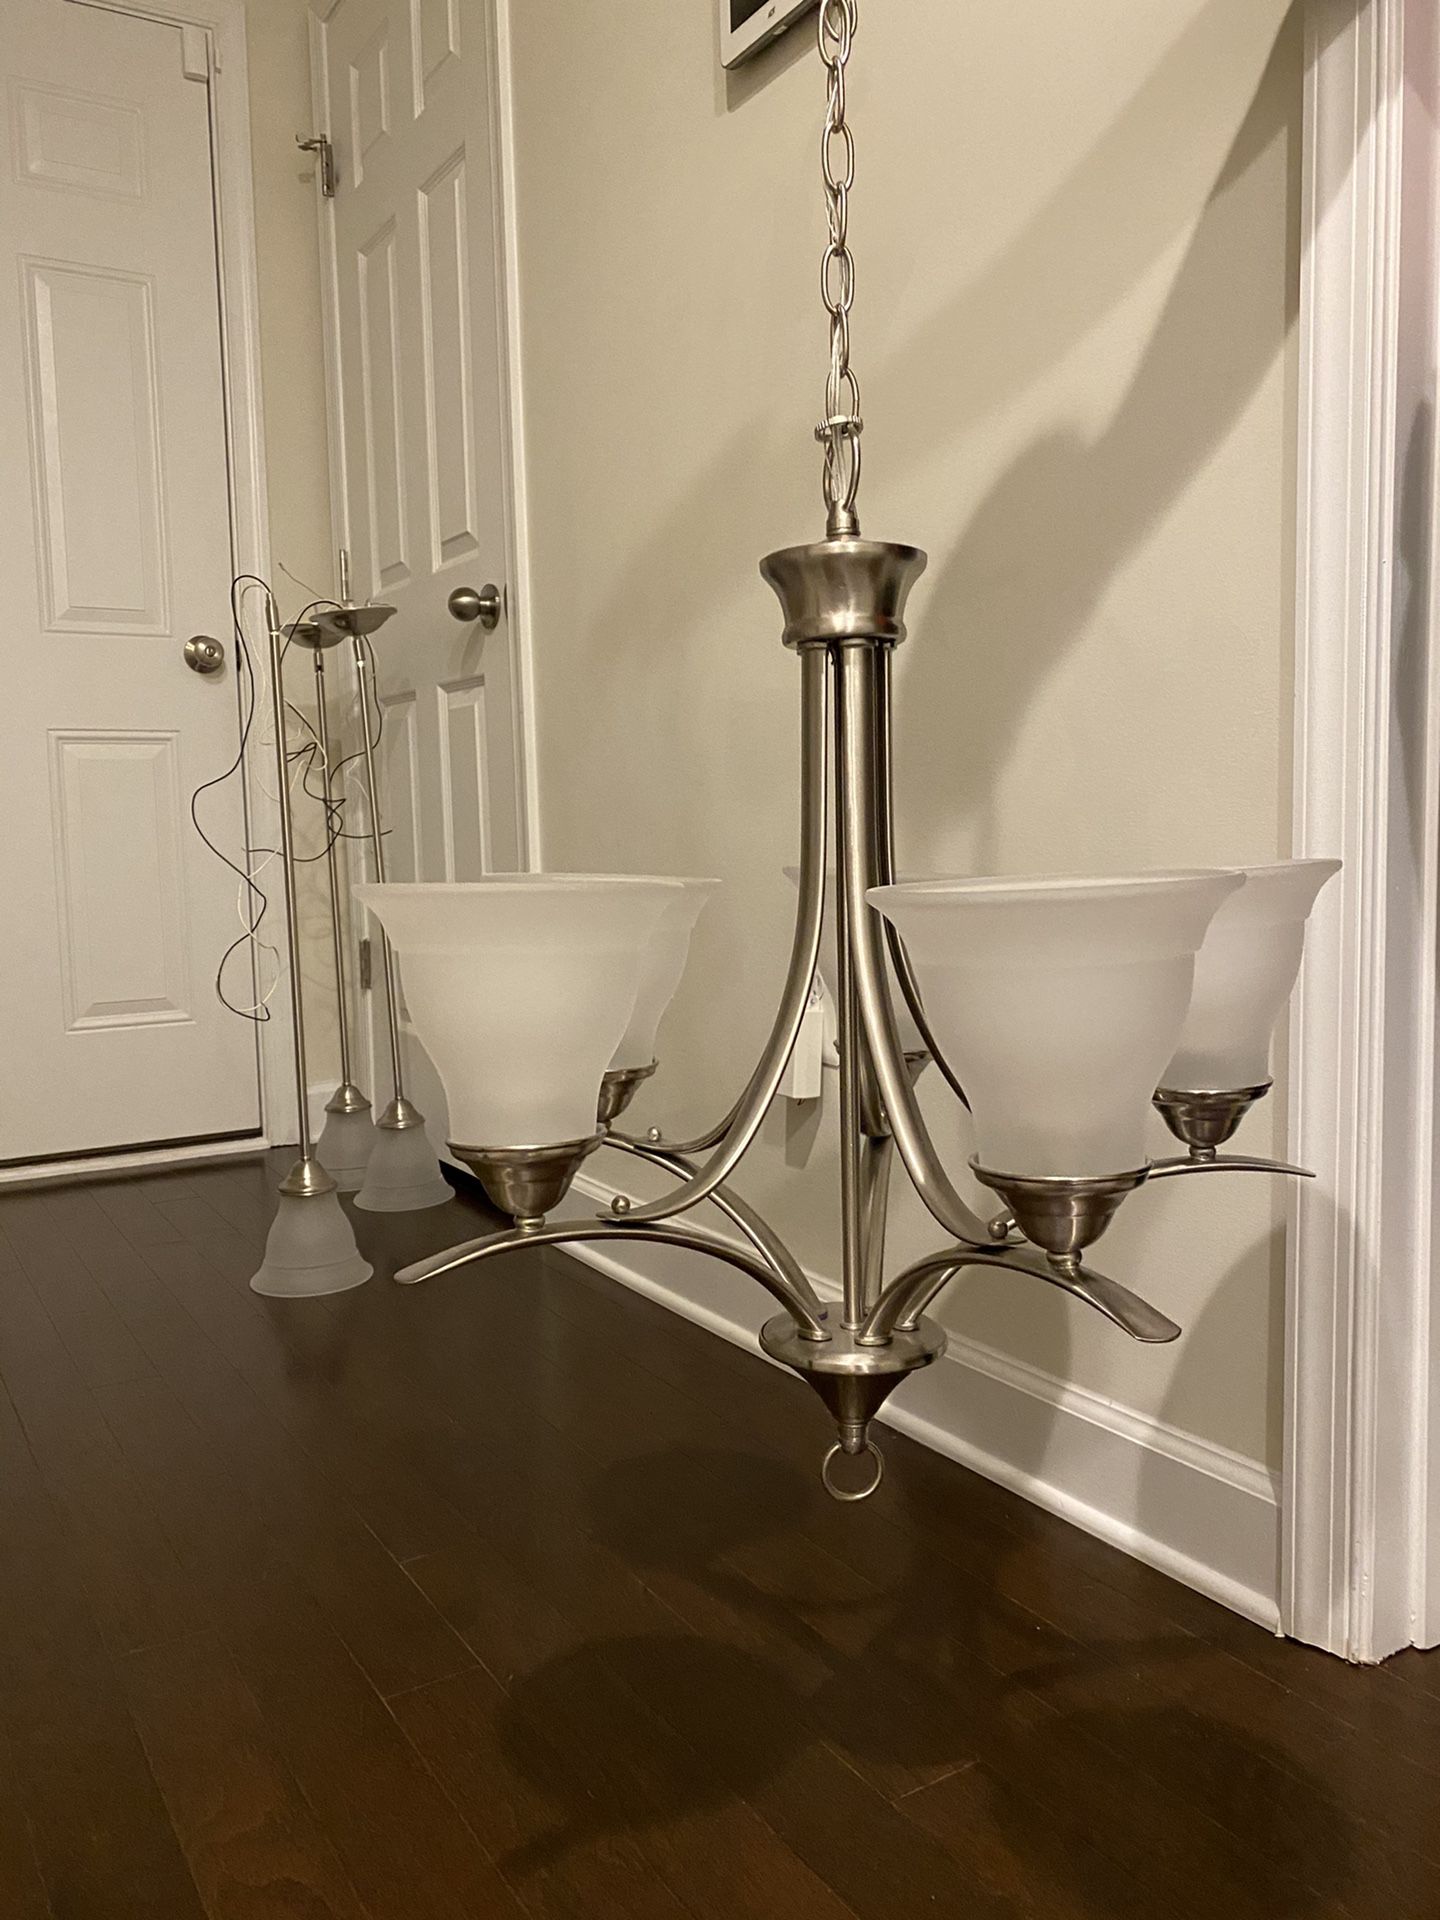 Brushed nickel 5-light chandelier